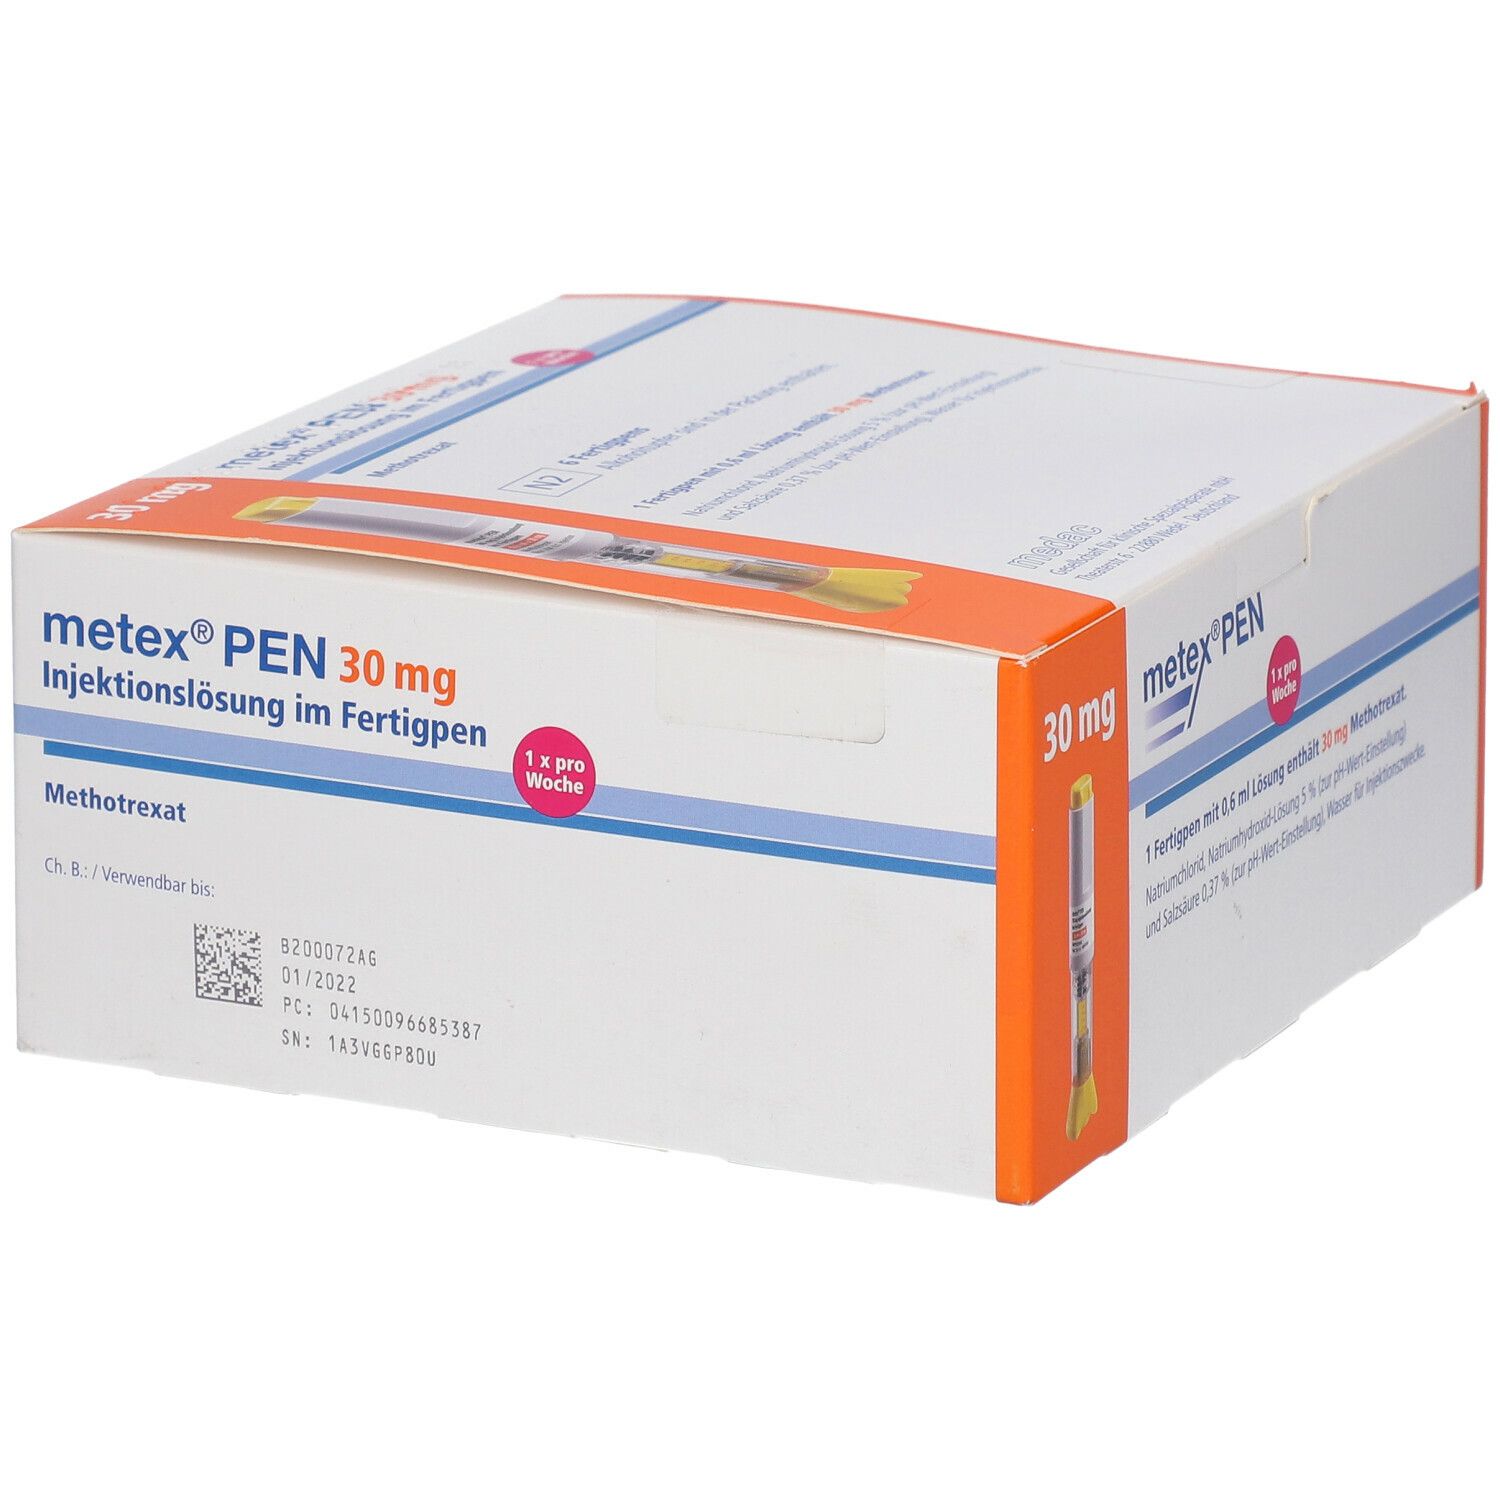 metex® PEN 30 mg